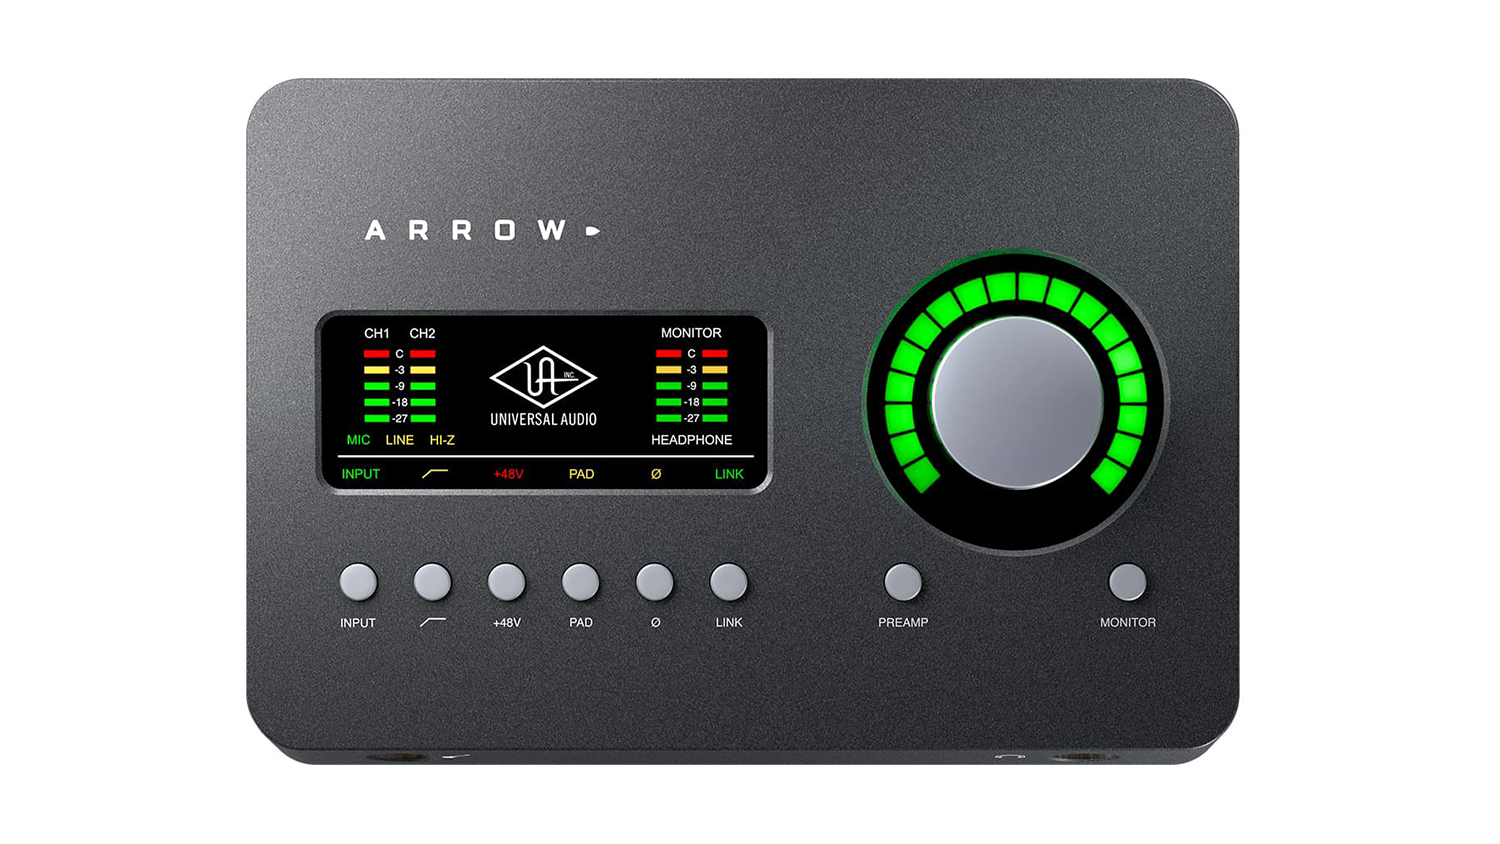 universal audio apollo arrow audio interface